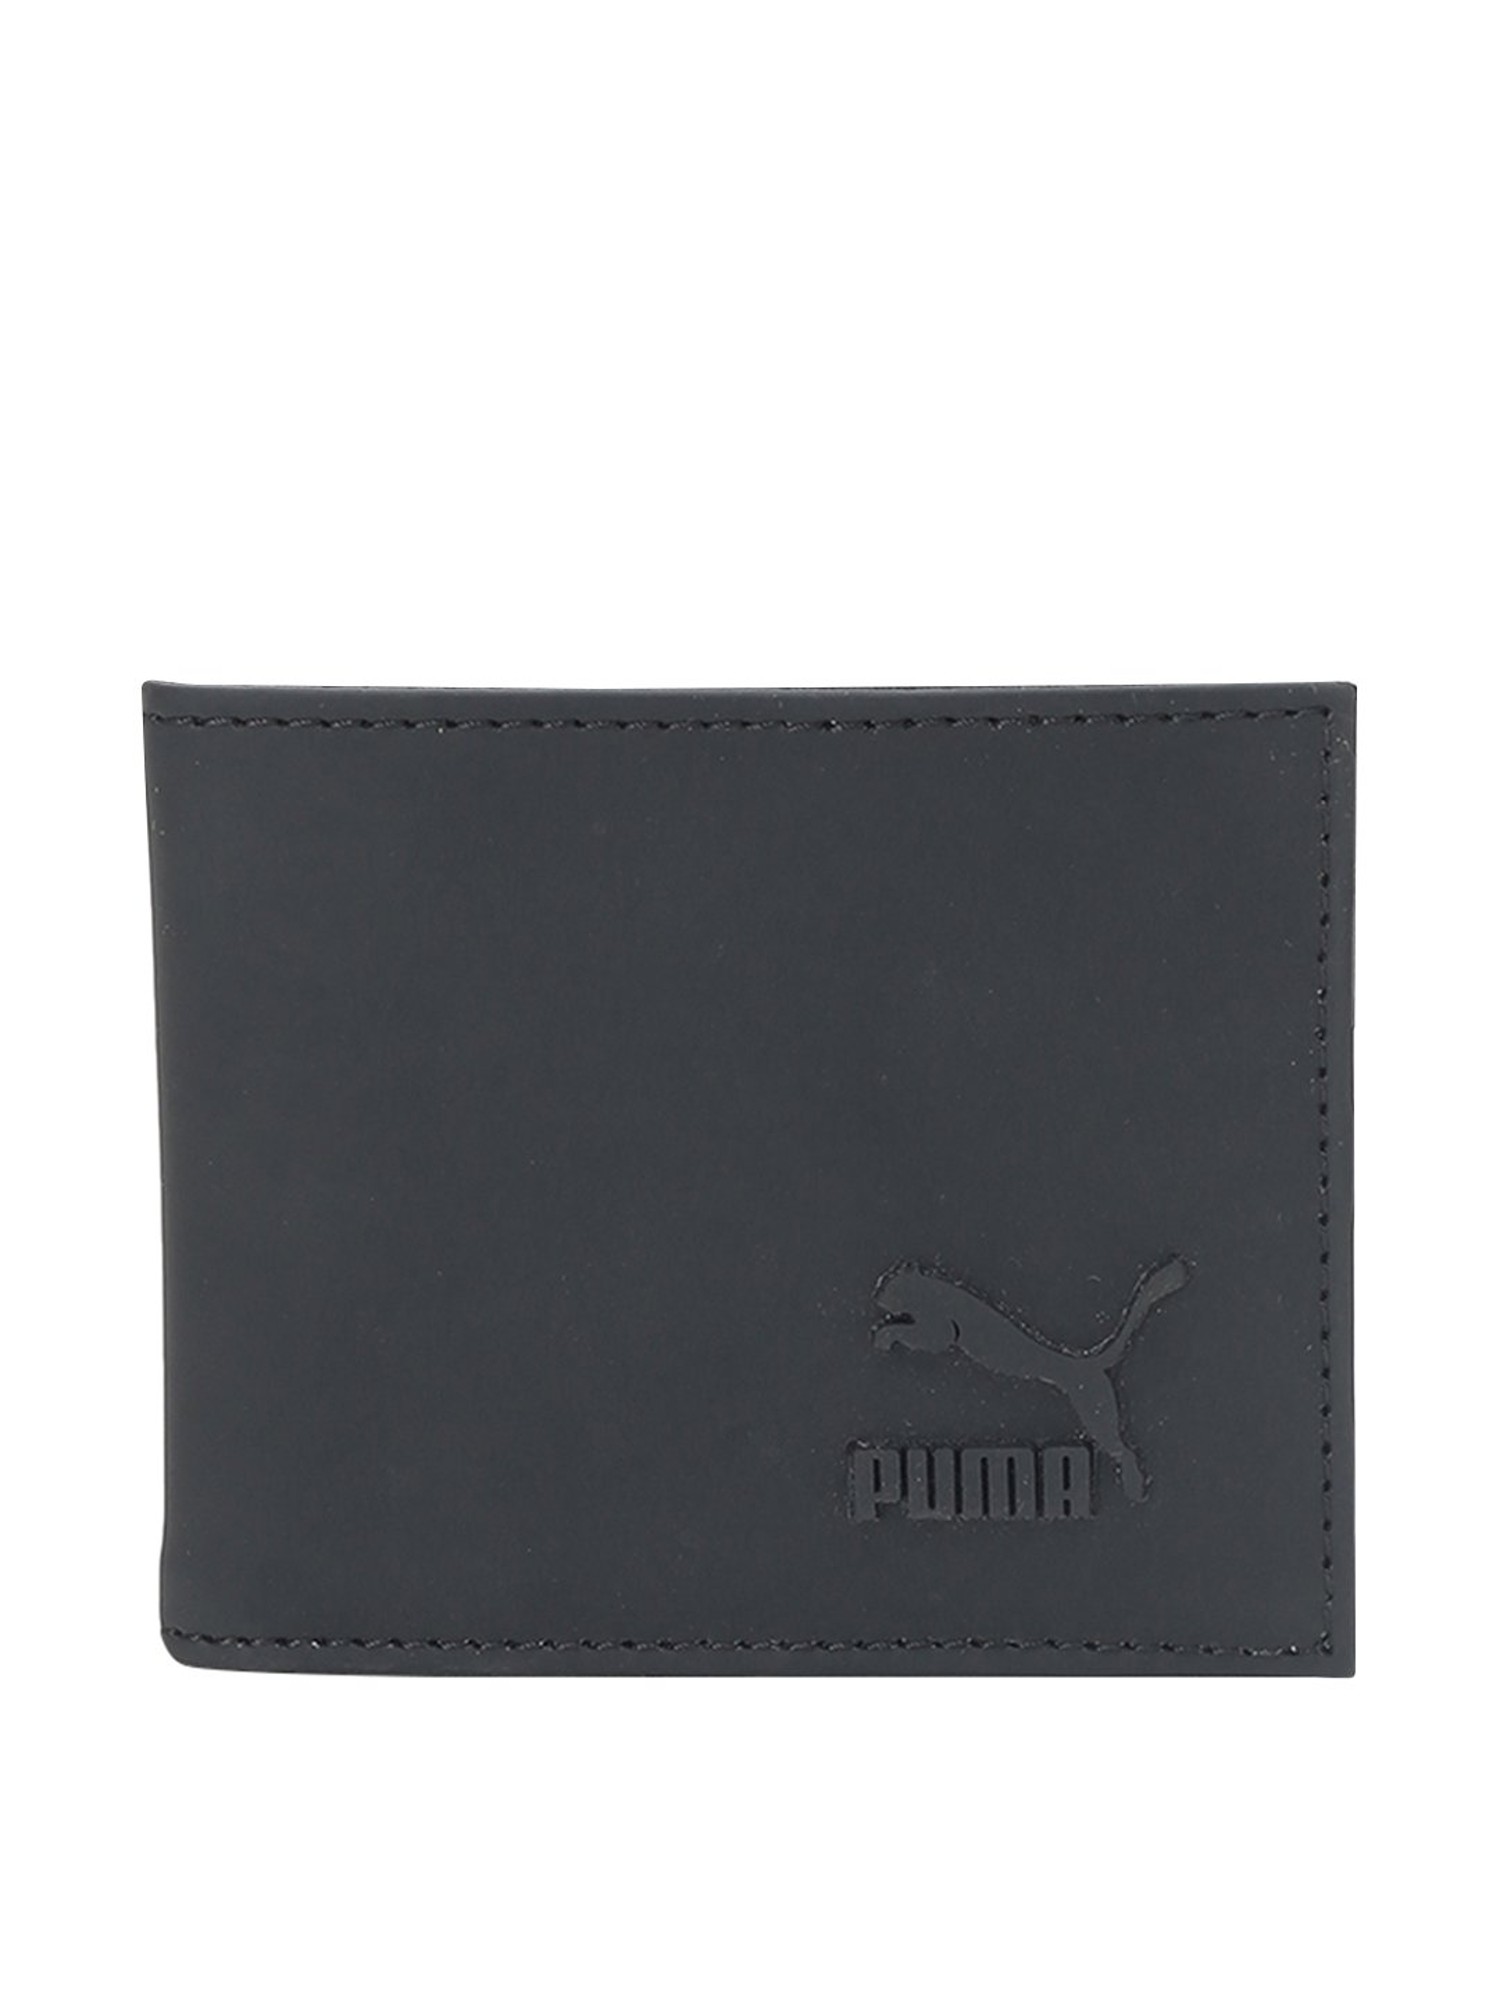 puma wallet offer